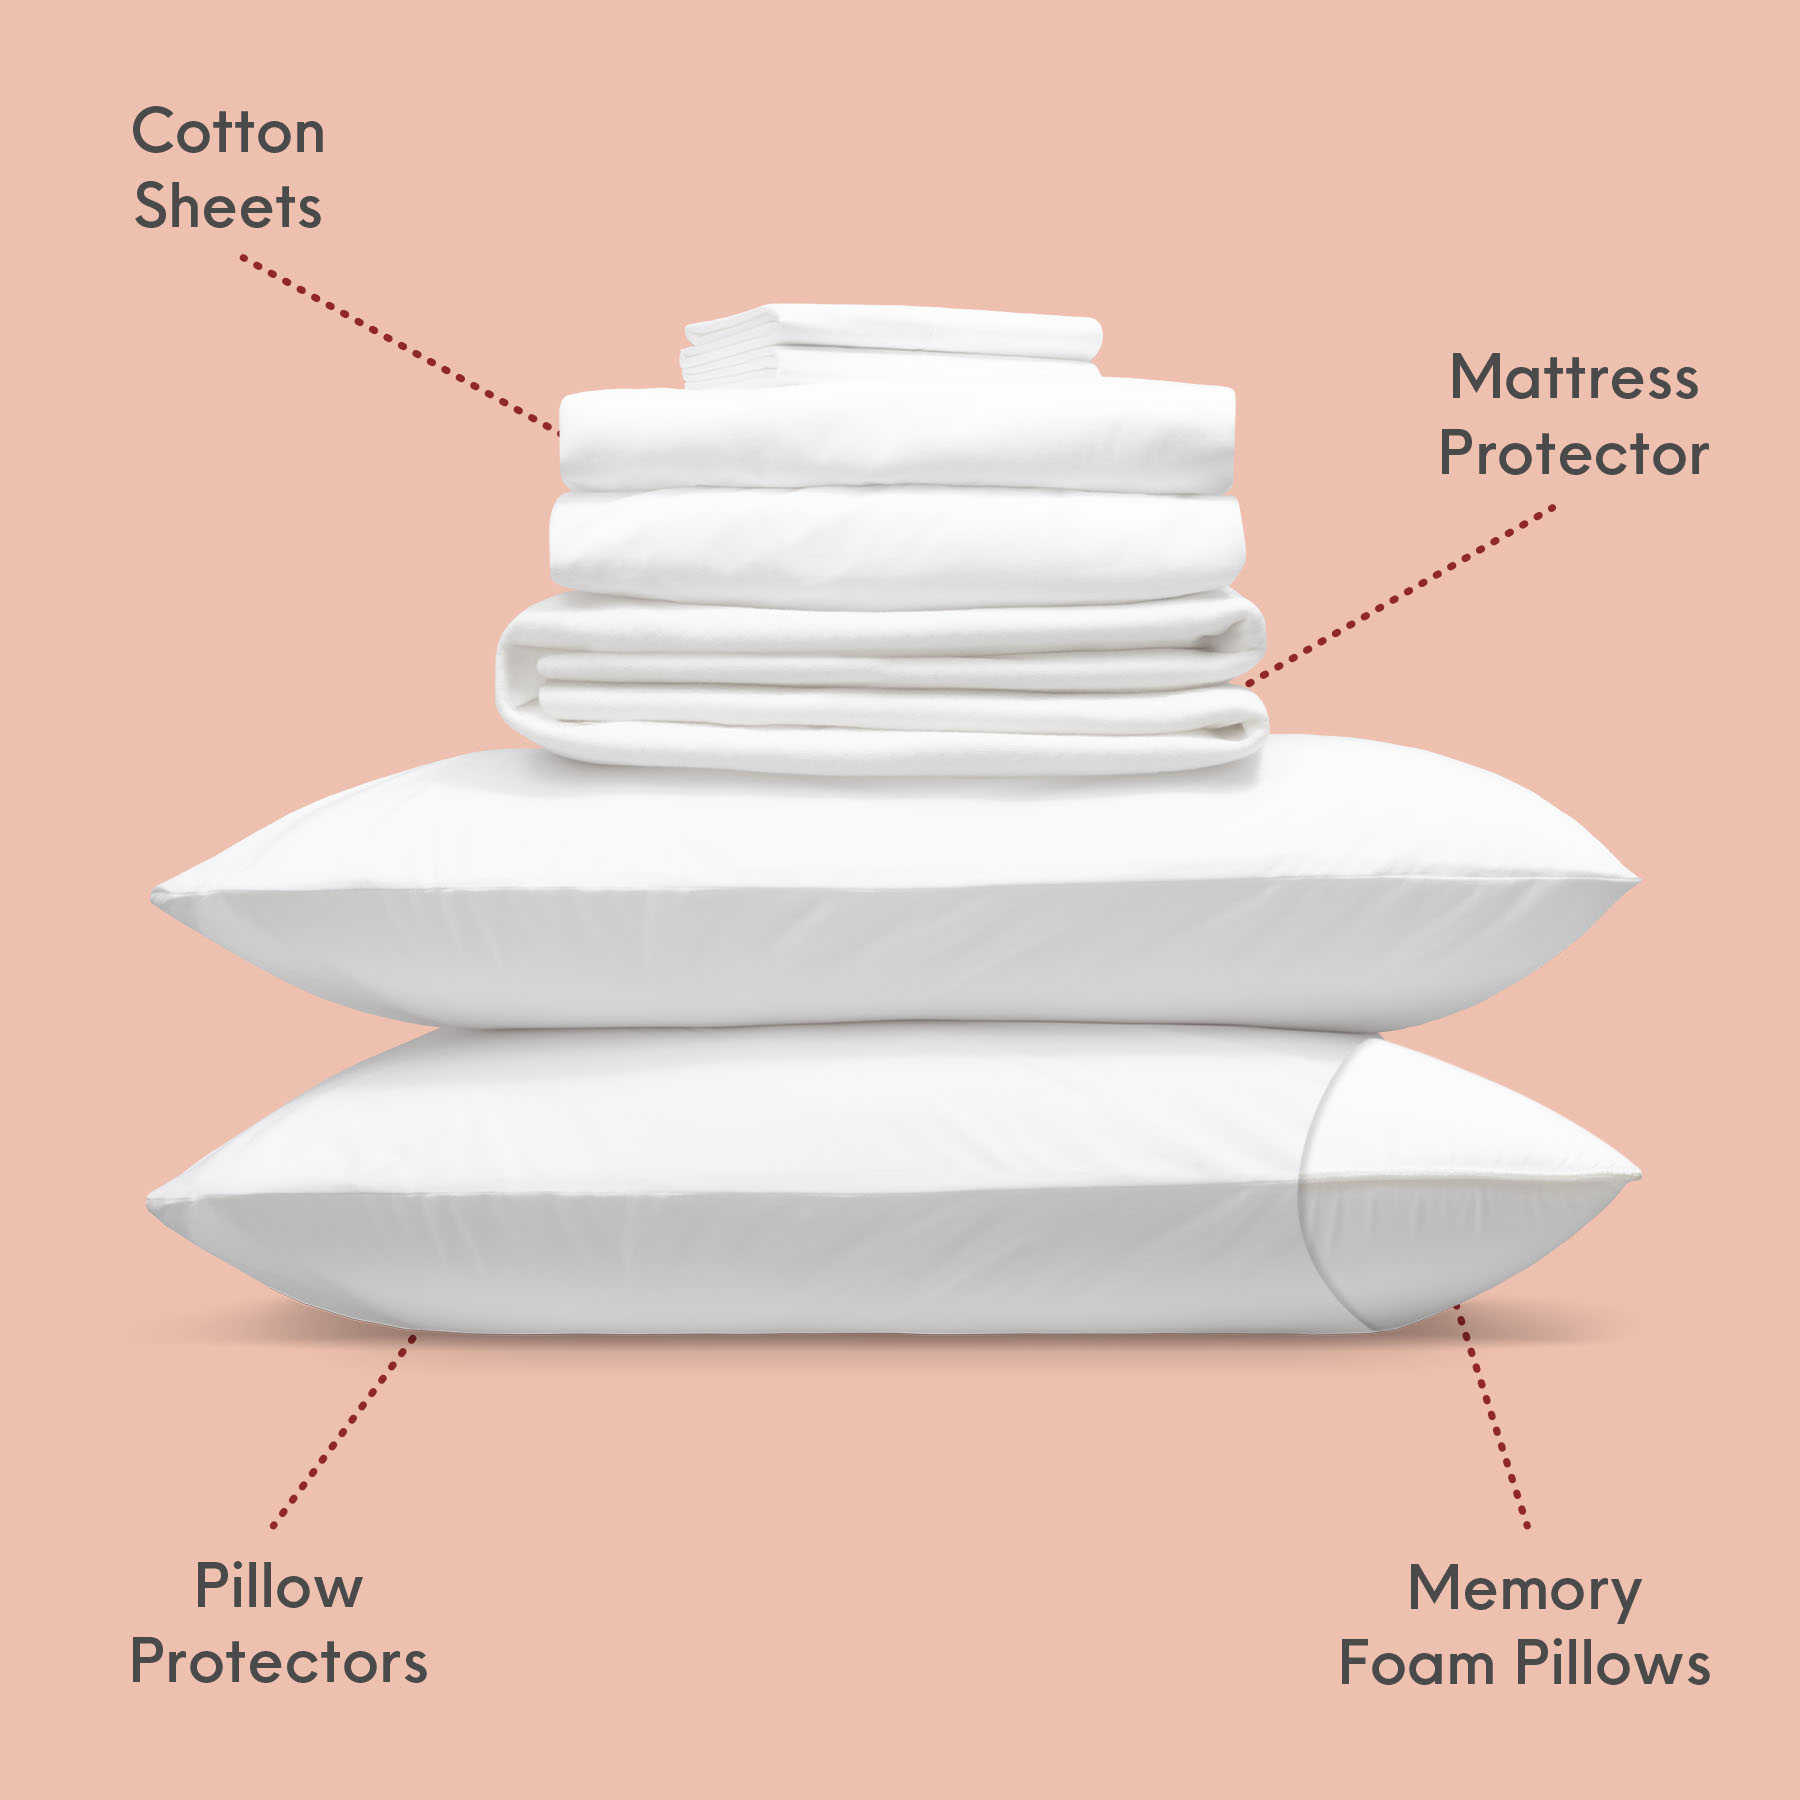 Douglas Comfort Sleep Bundle - includes pillows, sheets, mattress protector, and pillow protector